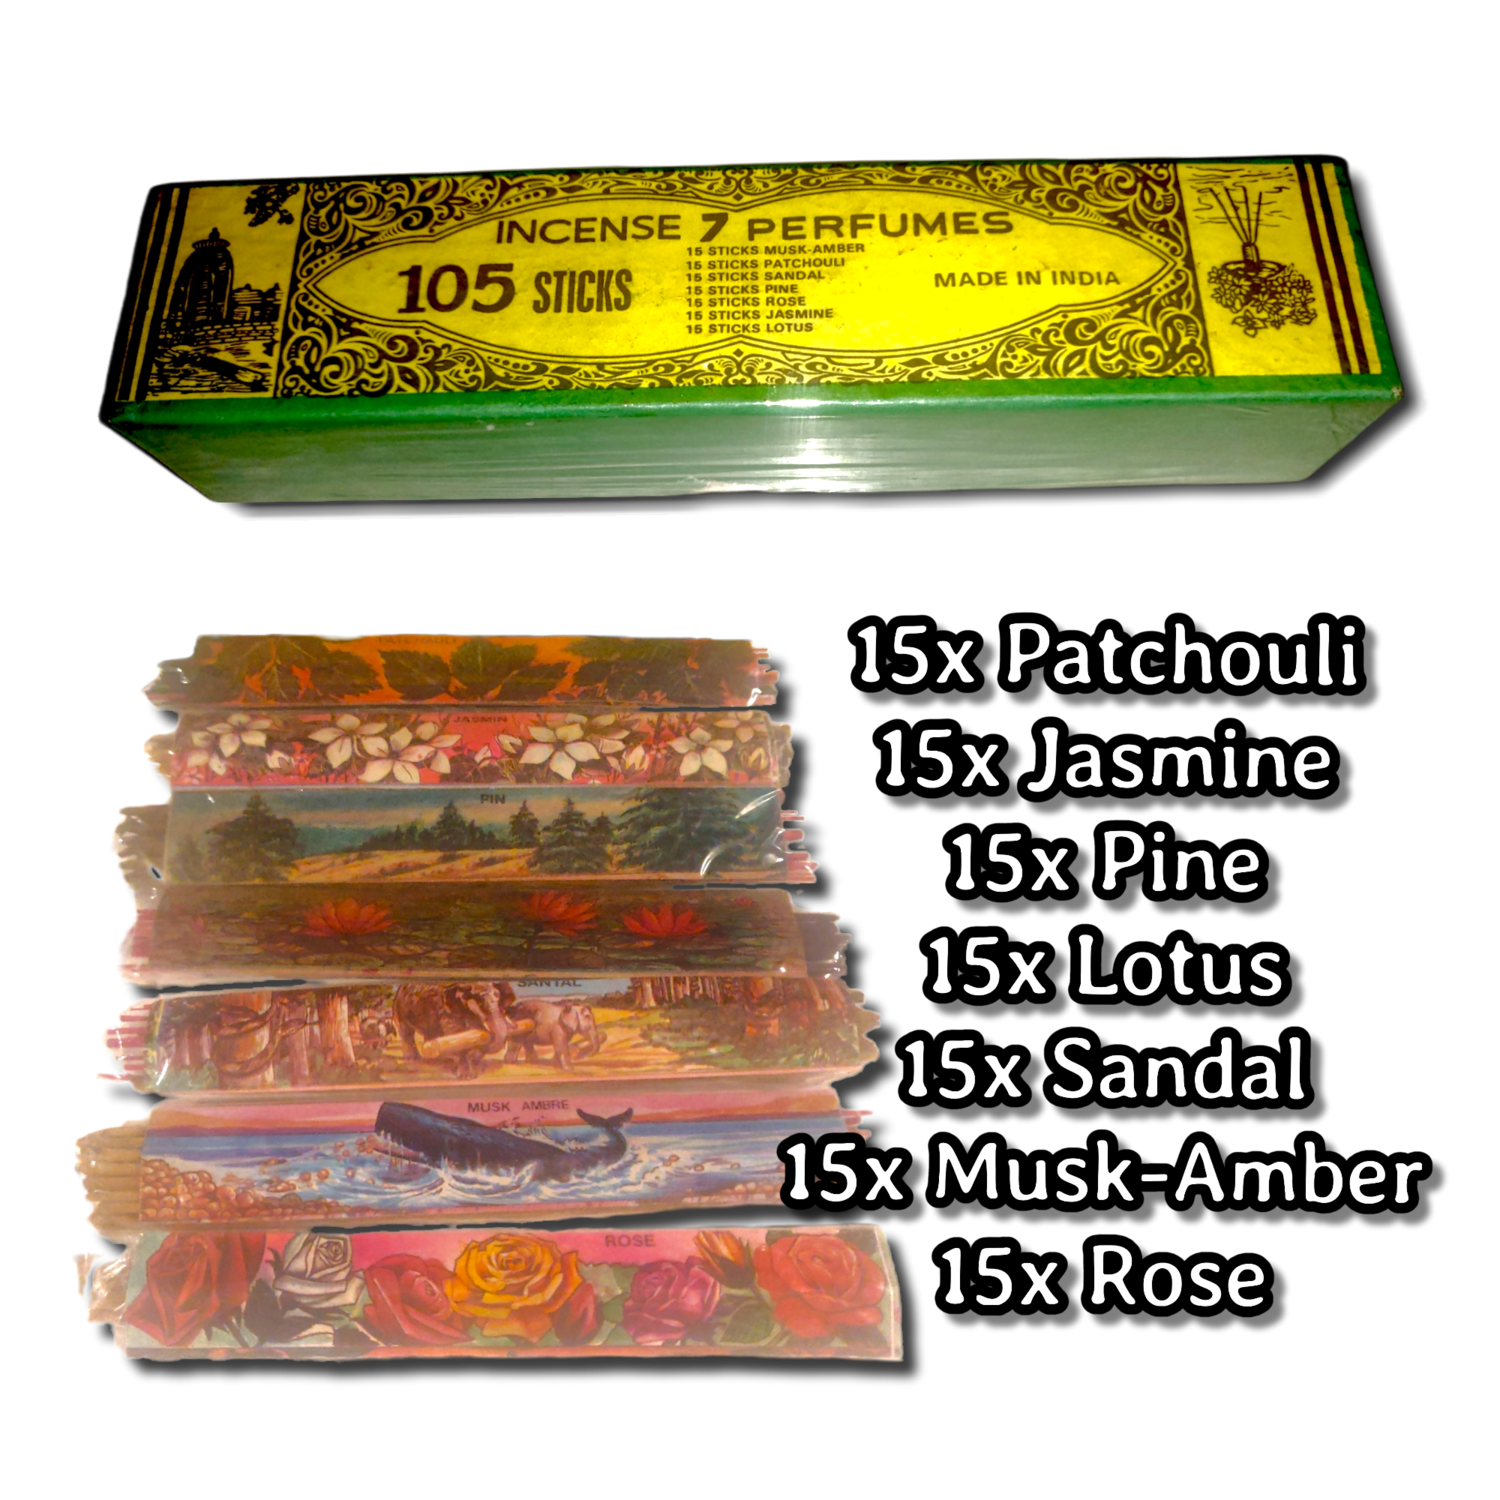 105x Sticks! Incense 7 Perfumes. Lotus, Musk-Amber, Patchouli, Sandal, Pine, Rose & Jasmine Made In India.